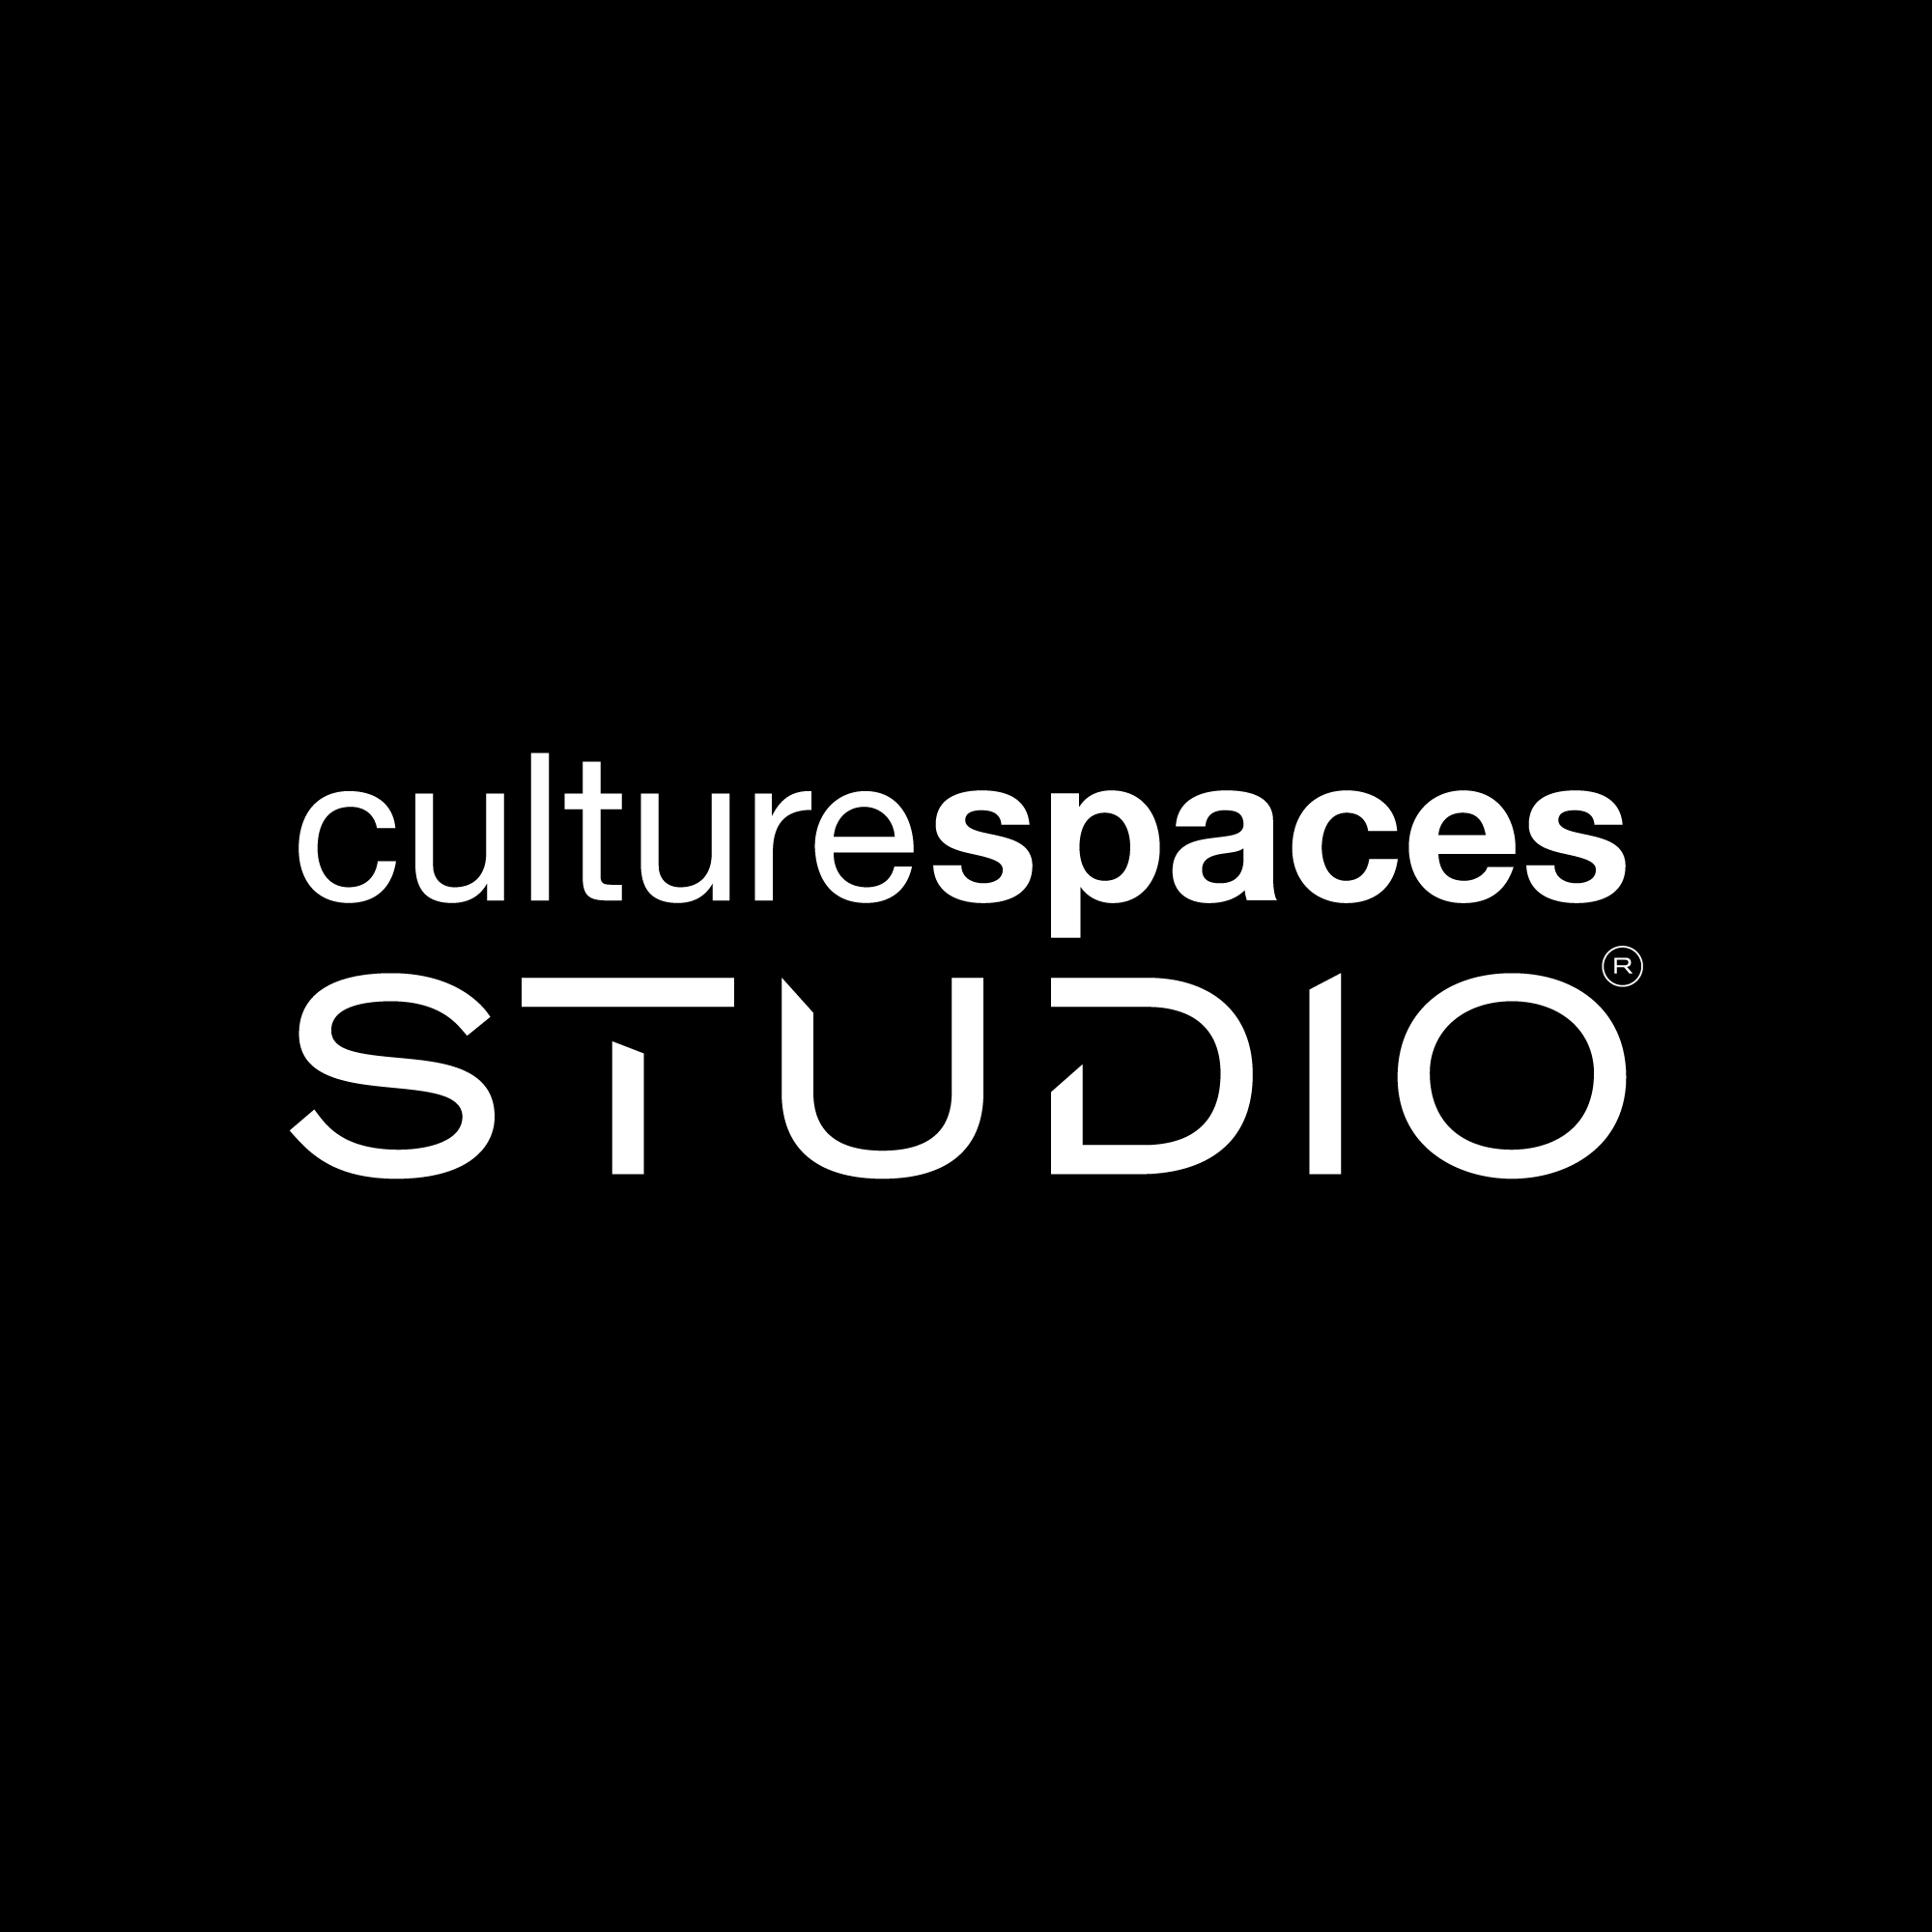 Culturespaces Studio